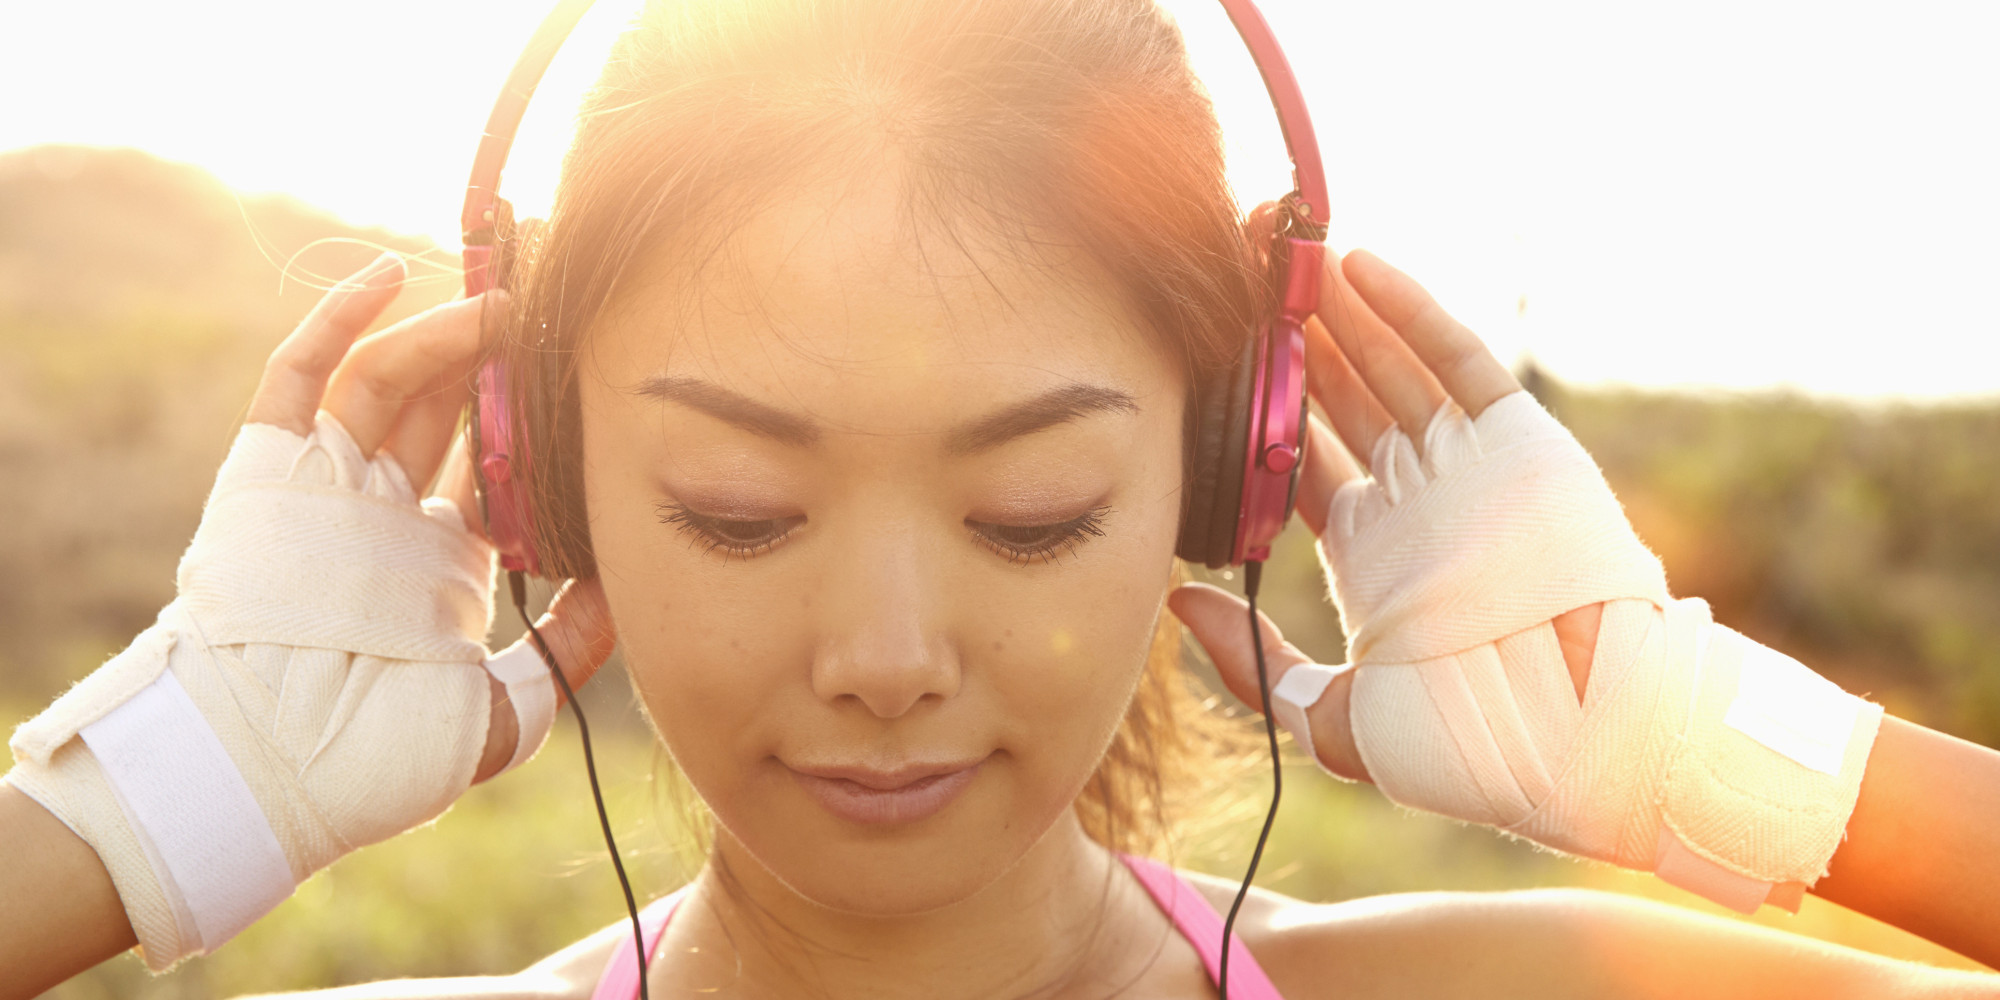 Japanese woman listening to headphones outdoors